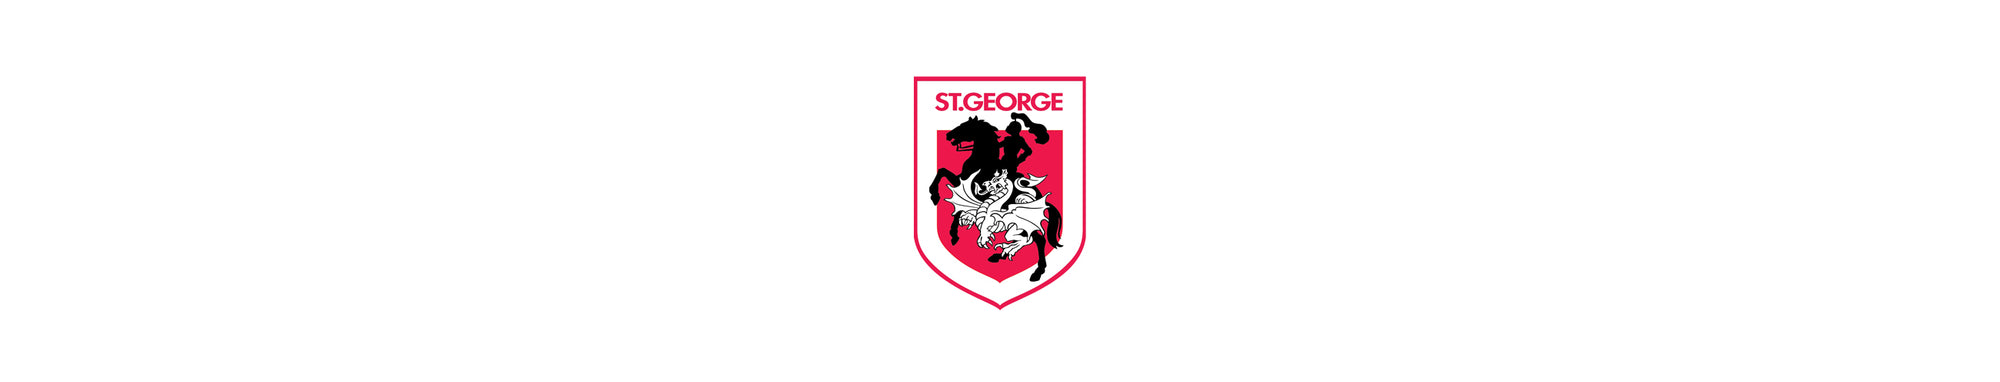 Retro St George Illawarra Dragons